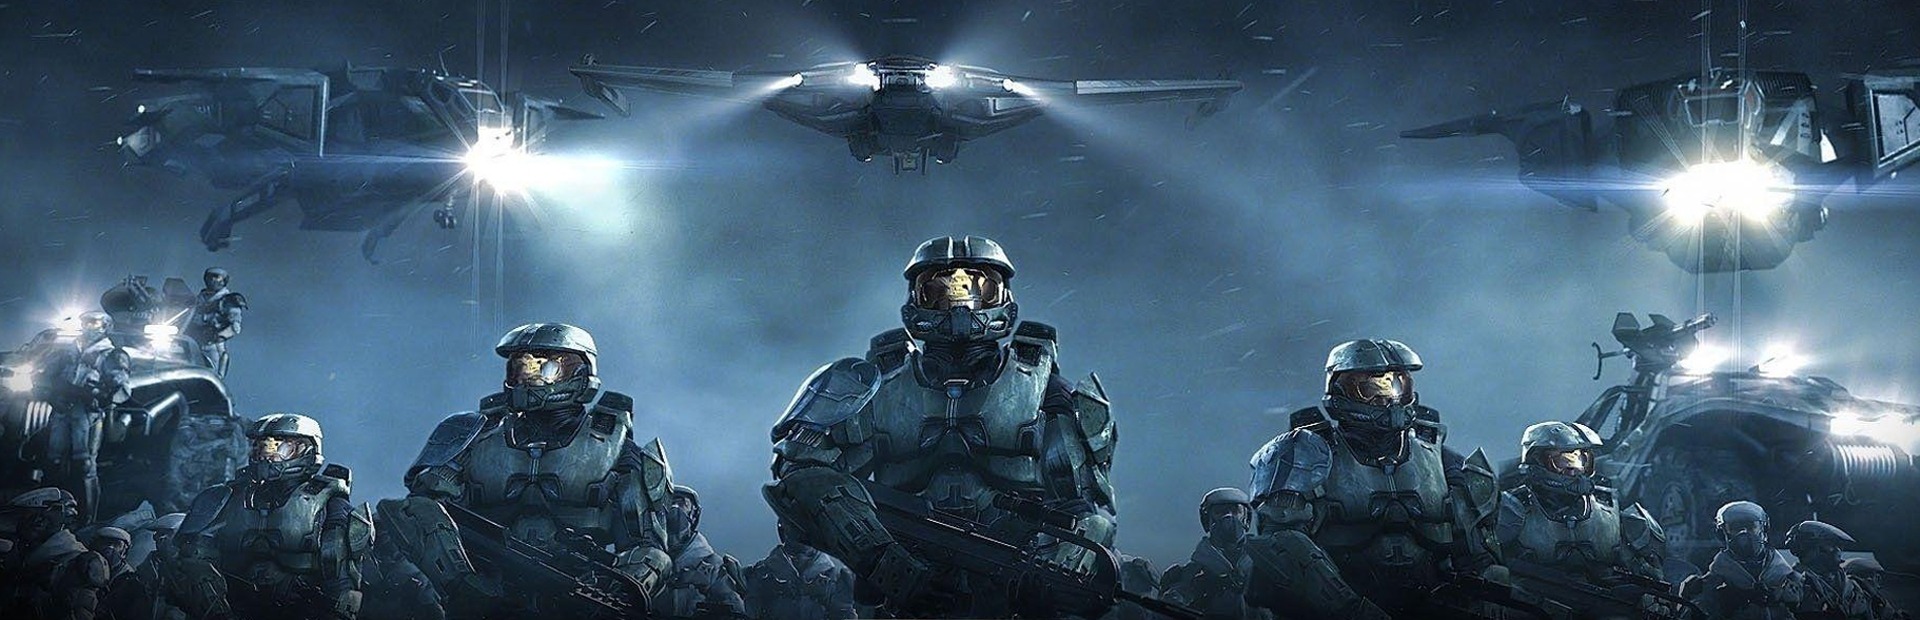 Buy Halo Wars: Definitive Edition - Microsoft Store en-MH